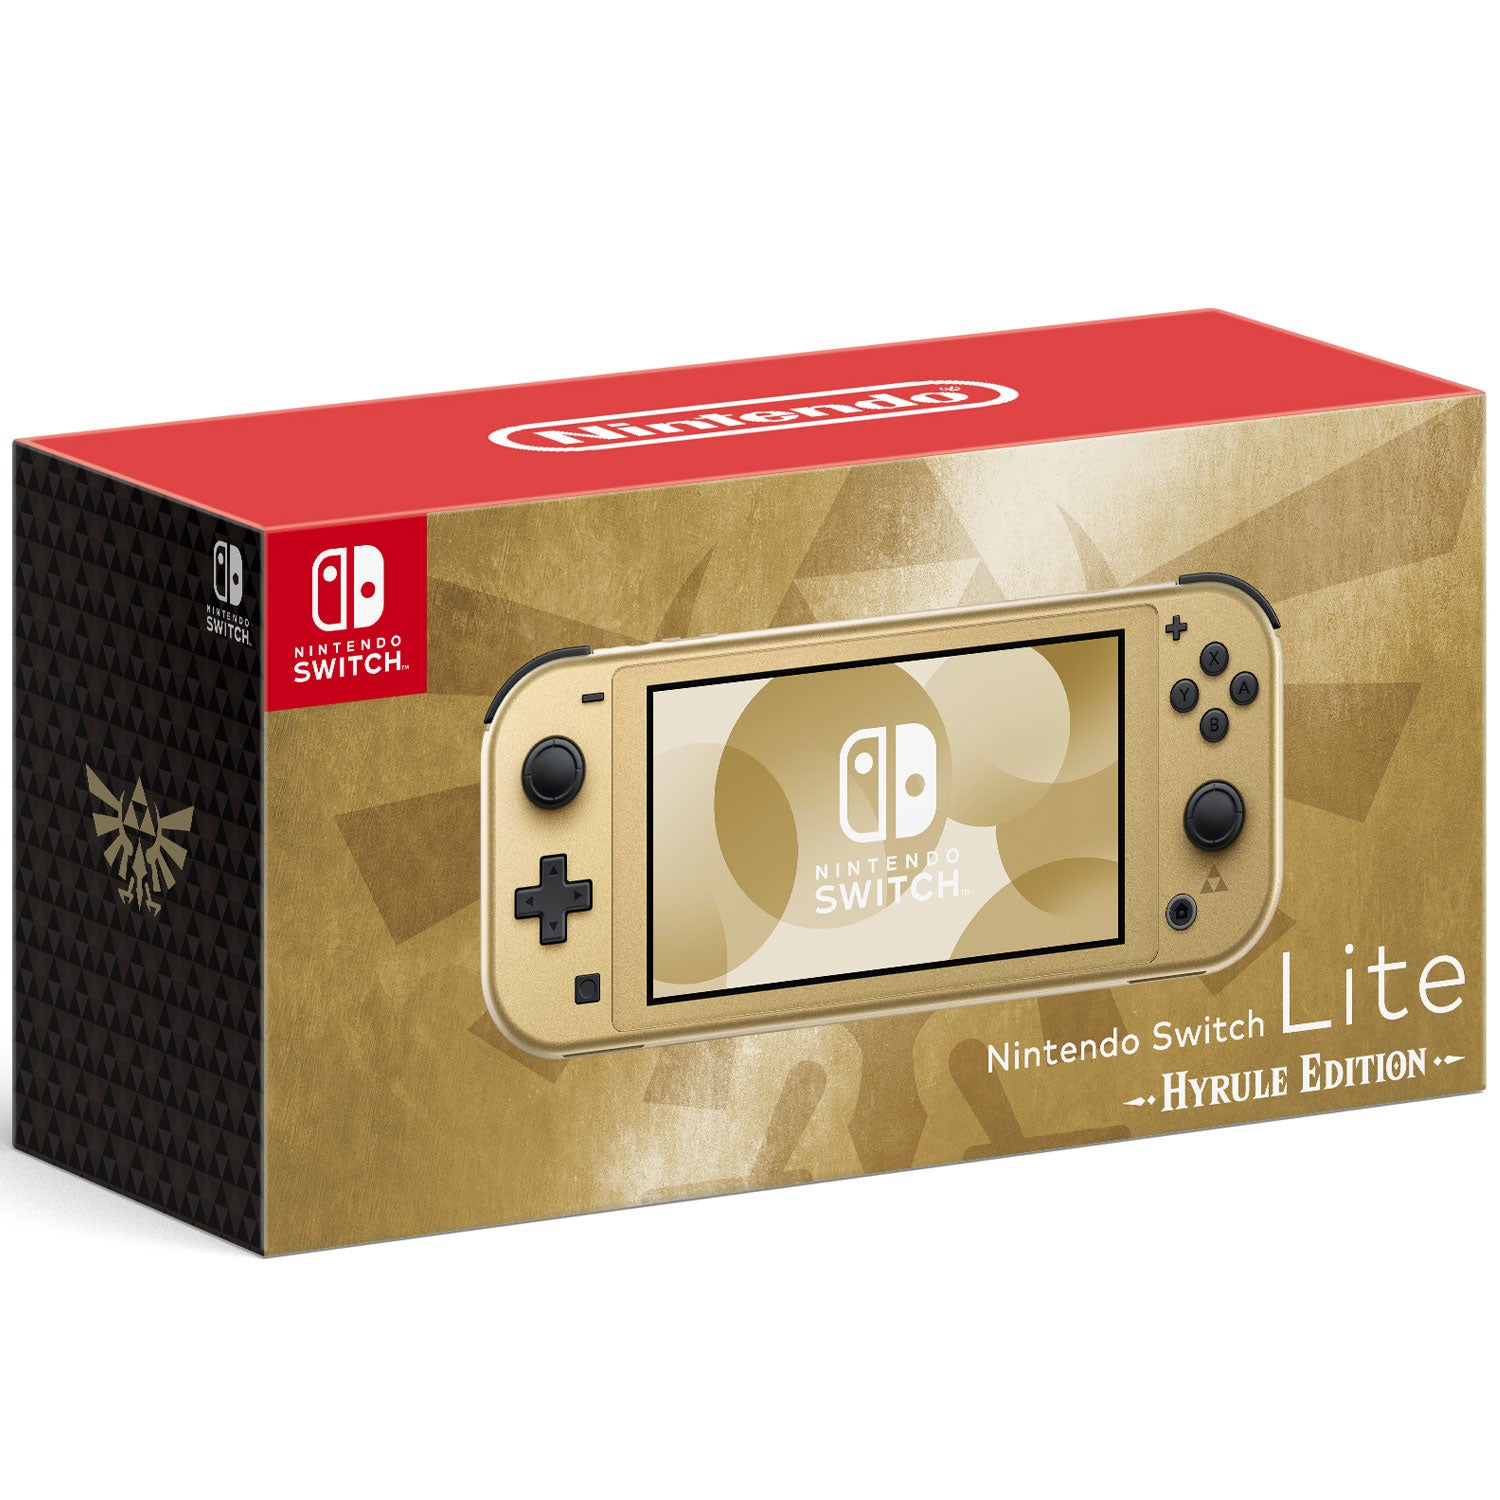 Nintendo Switch Lite [Hyrule Edition] + 1 Year Warranty By Singapore Nintendo Distributor